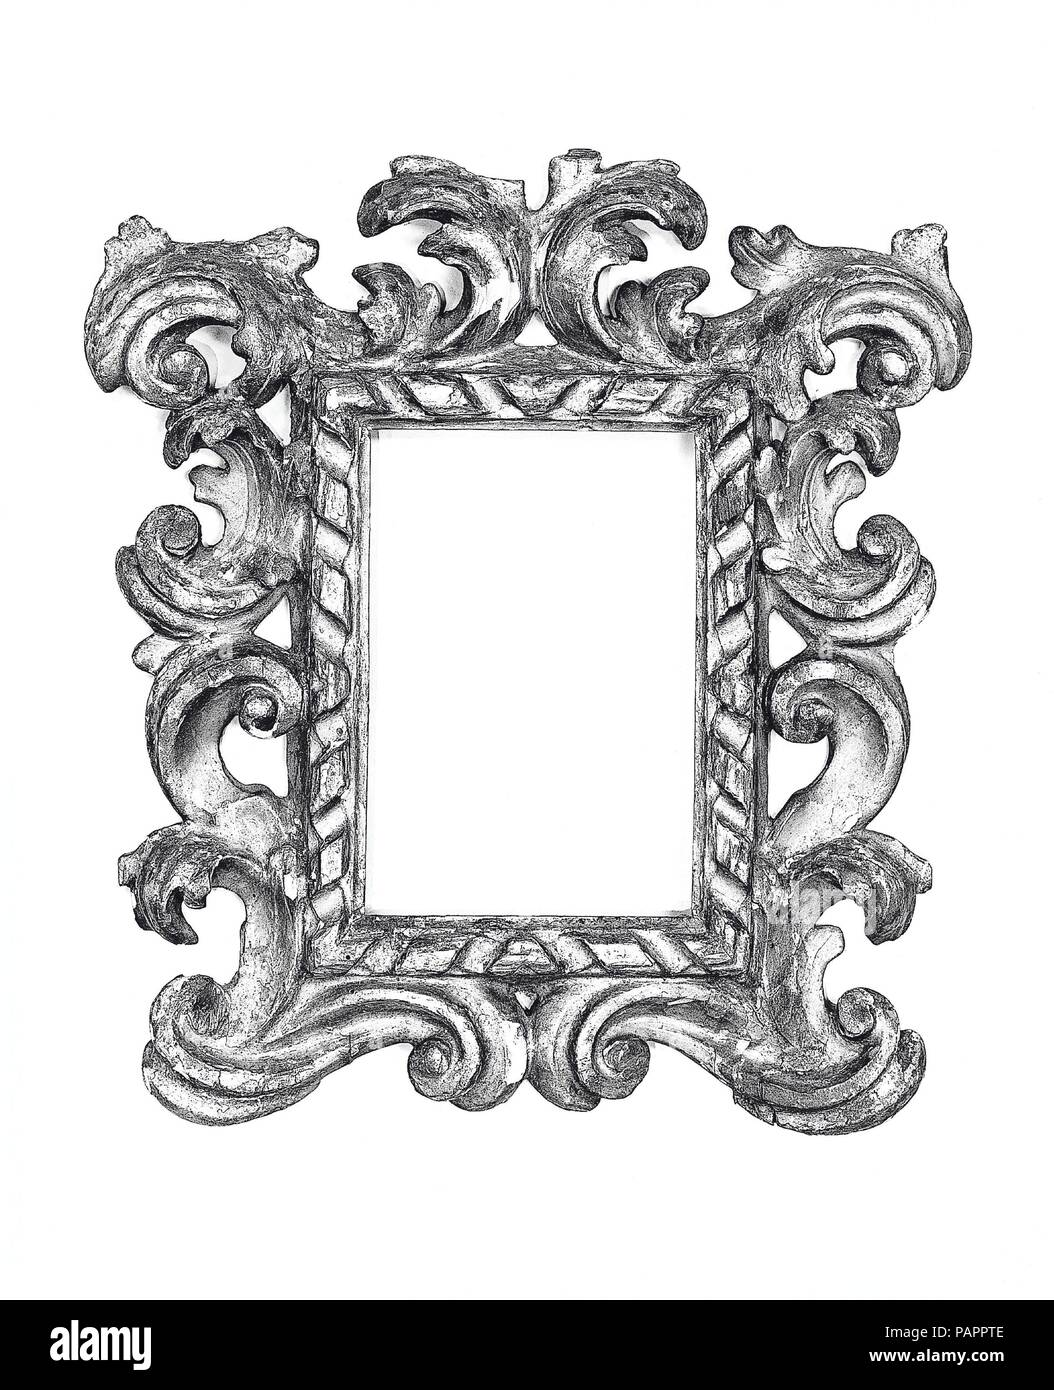 Cauliculi frame. Culture: Italian, Bologna. Dimensions: 32 x 29, 15.7 x 10.5, 17 x 11.6 cm.. Date: early 18th century. Museum: Metropolitan Museum of Art, New York, USA. Stock Photo